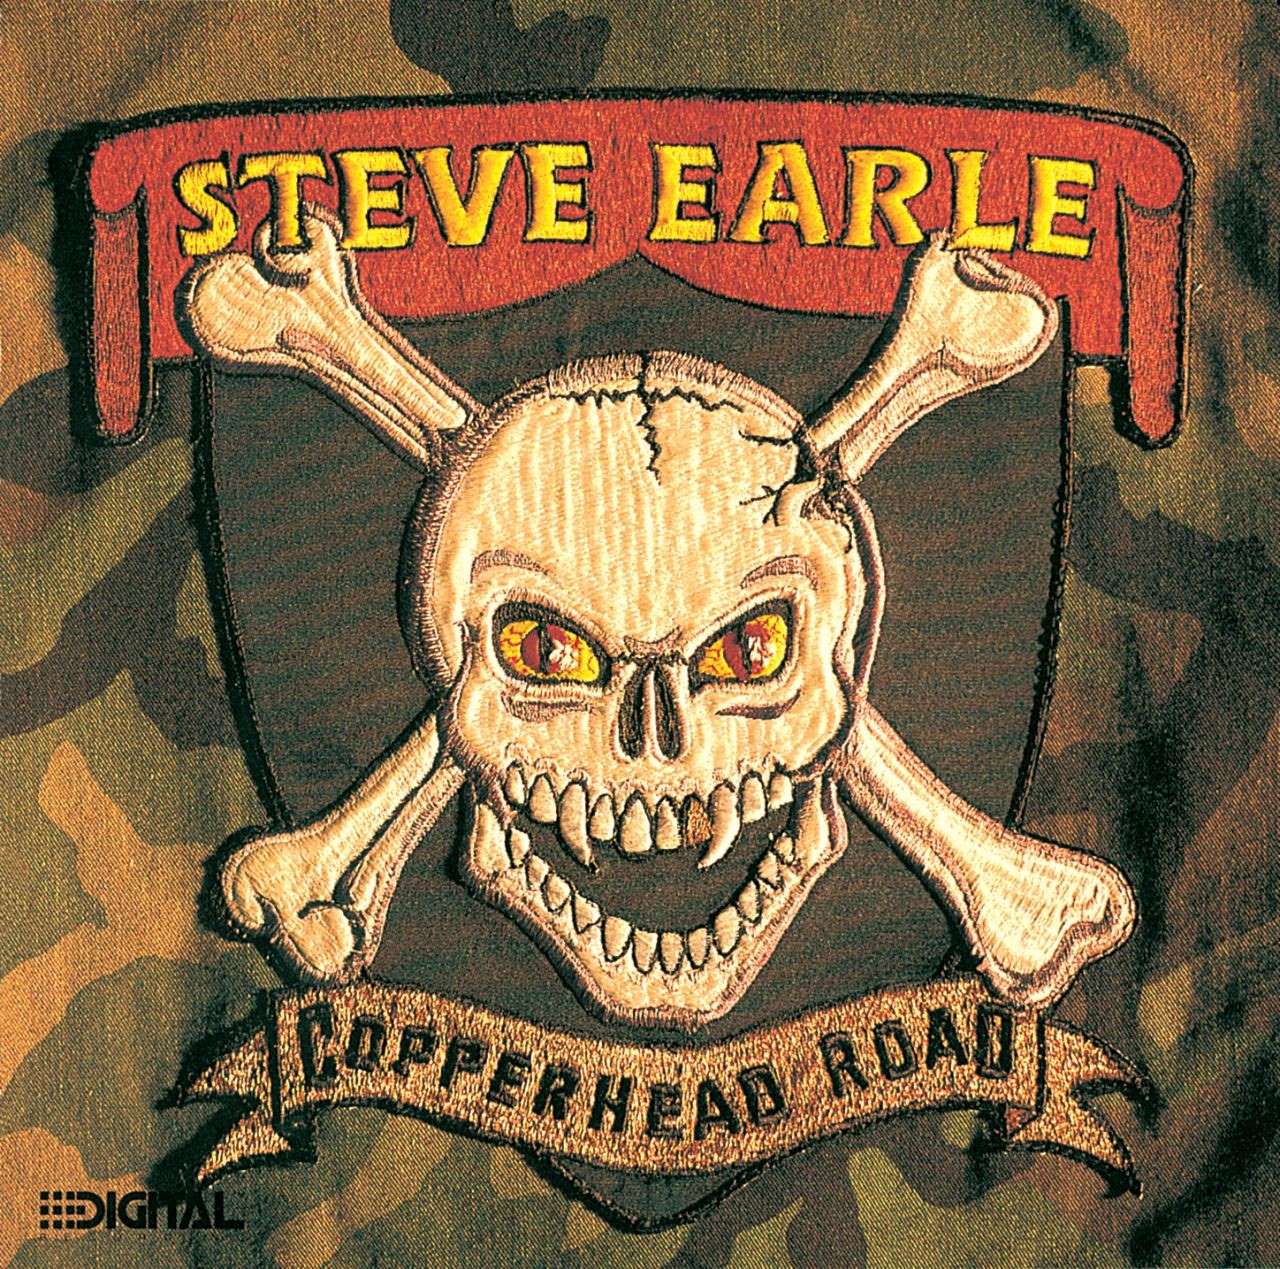 Steve Earle - Copperhead Road cover album